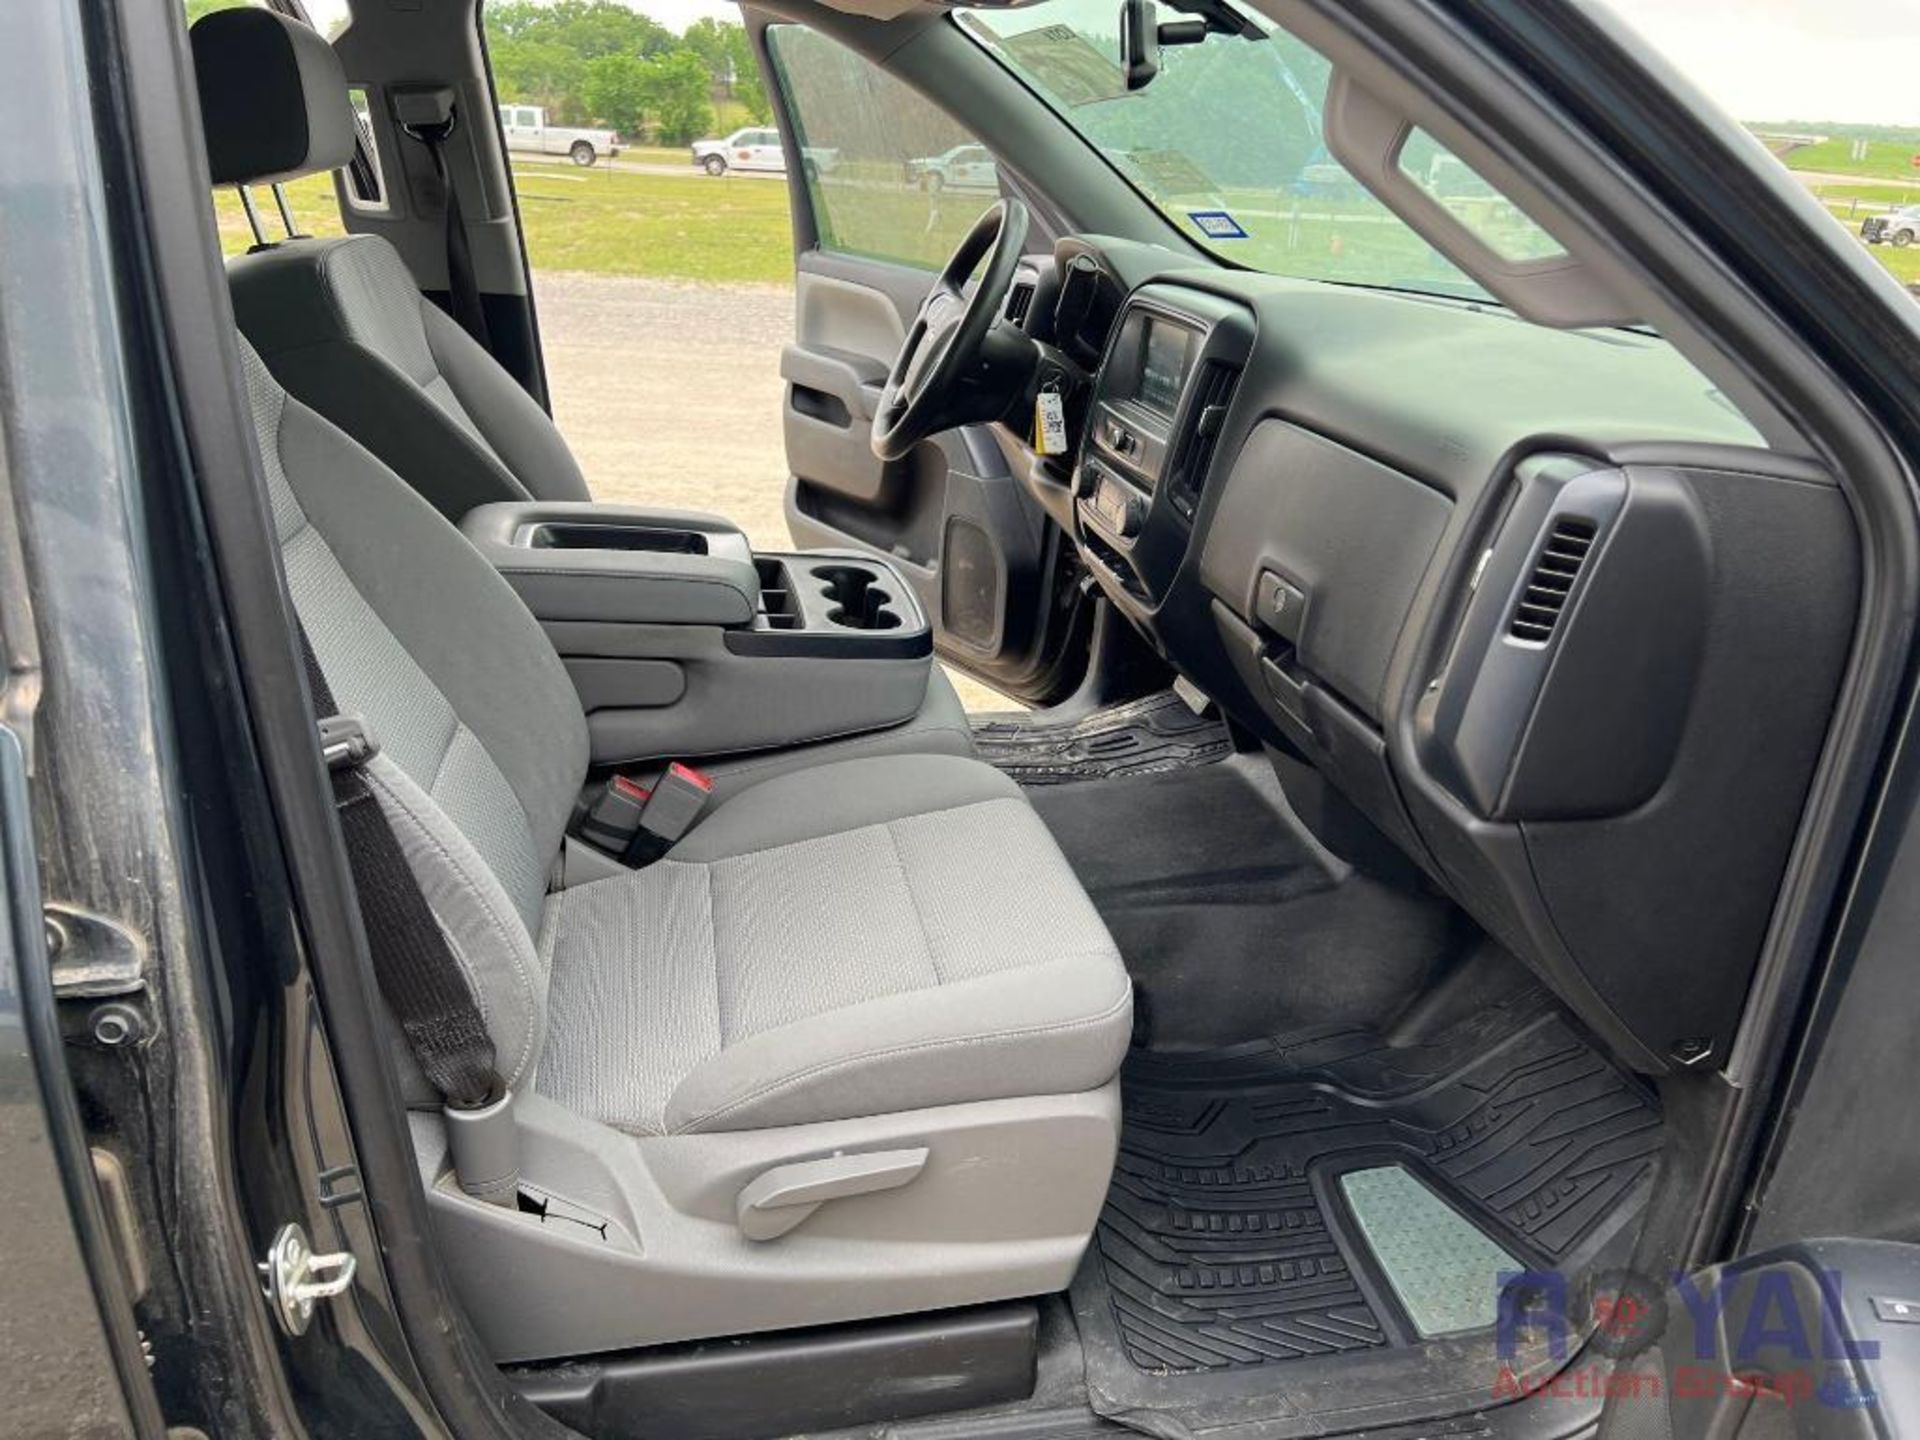 2018 Chevrolet Silverado 4x4 Crew Cab Pickup Truck - Image 40 of 51